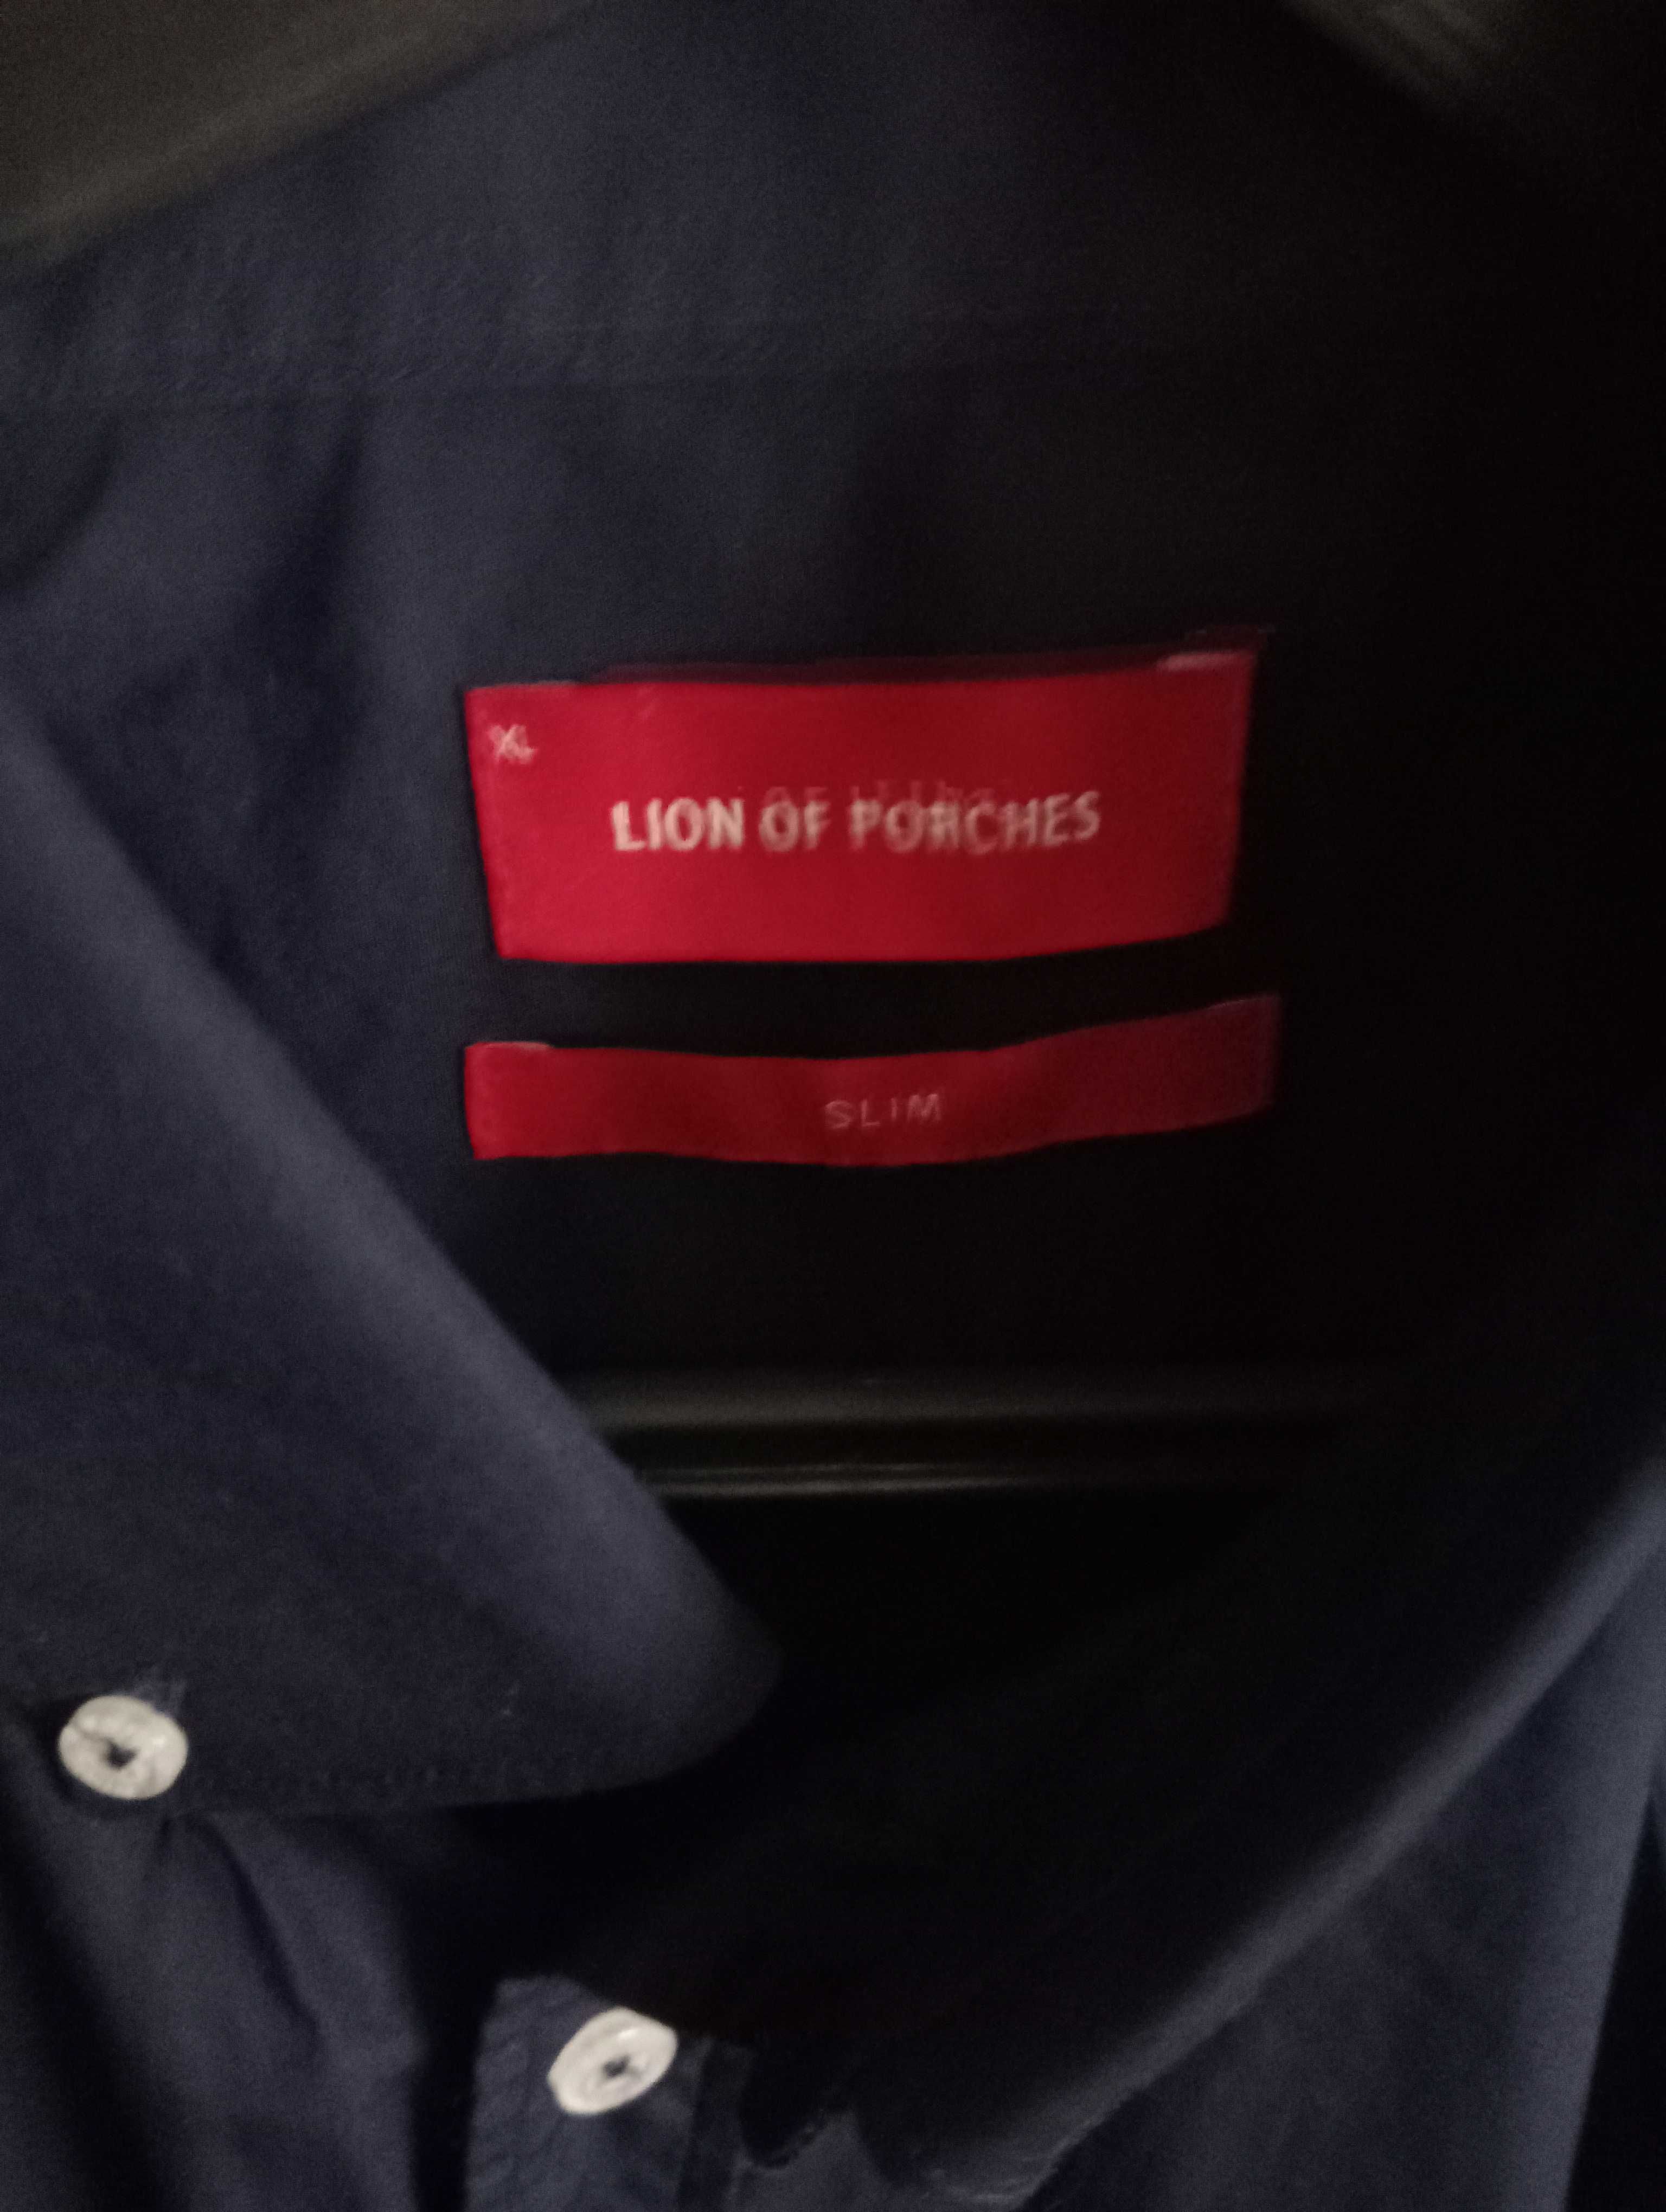 Camisa Lion of Porches